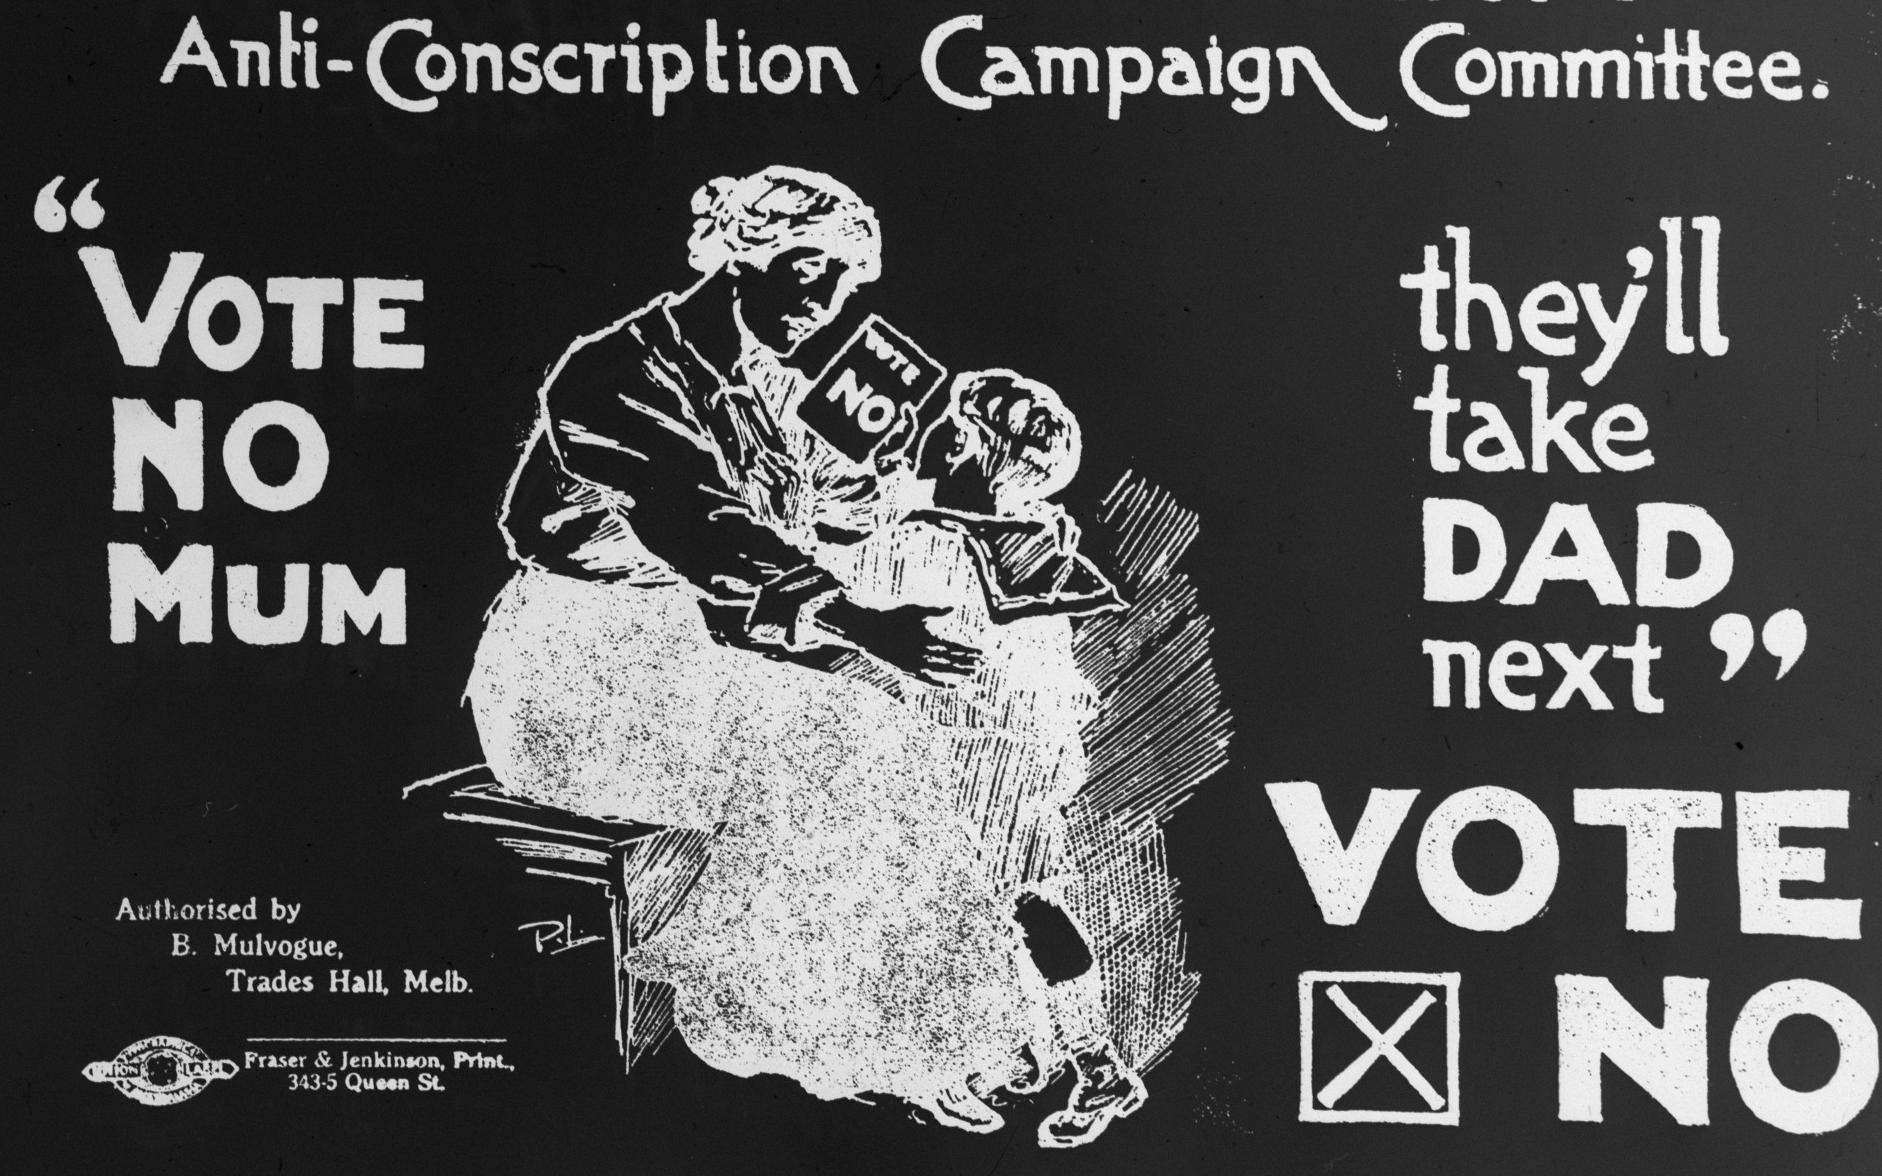  Labor Party anti-conscription advertisement.